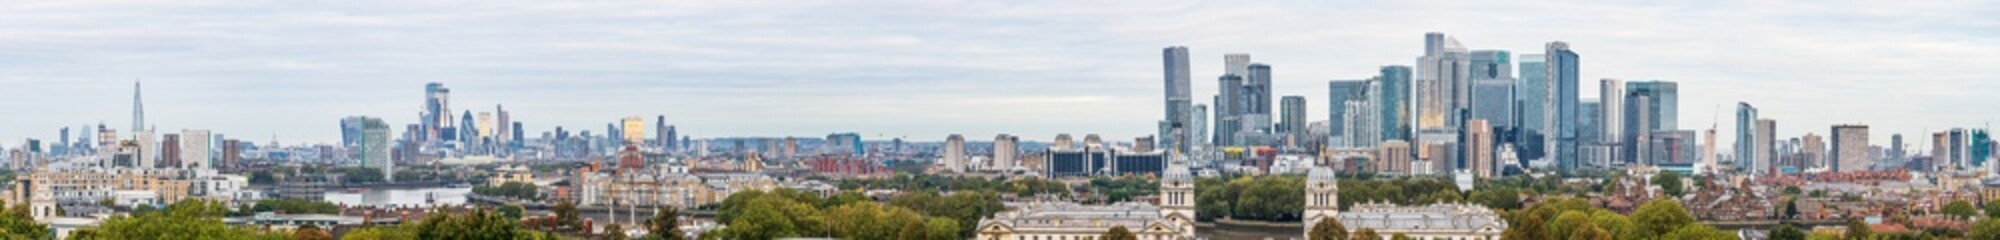 London skyline panorama on cloudy autumn day 